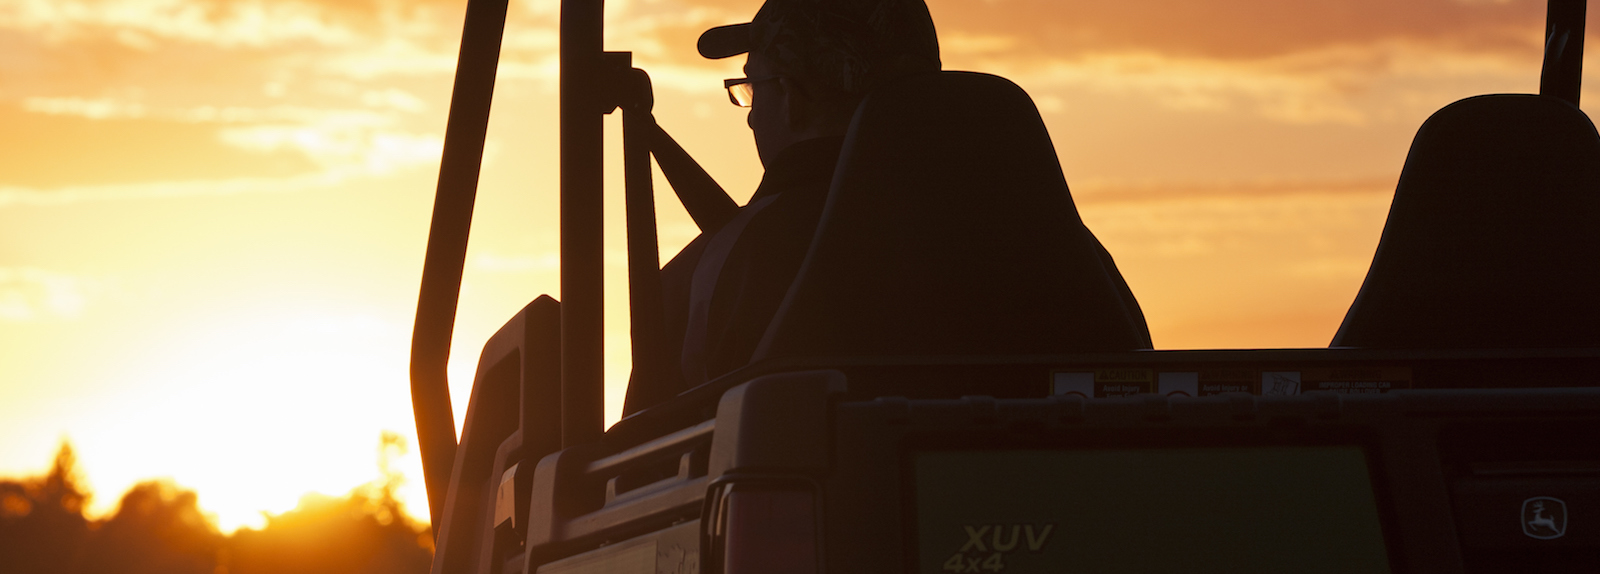 man on a vehicle at sunset